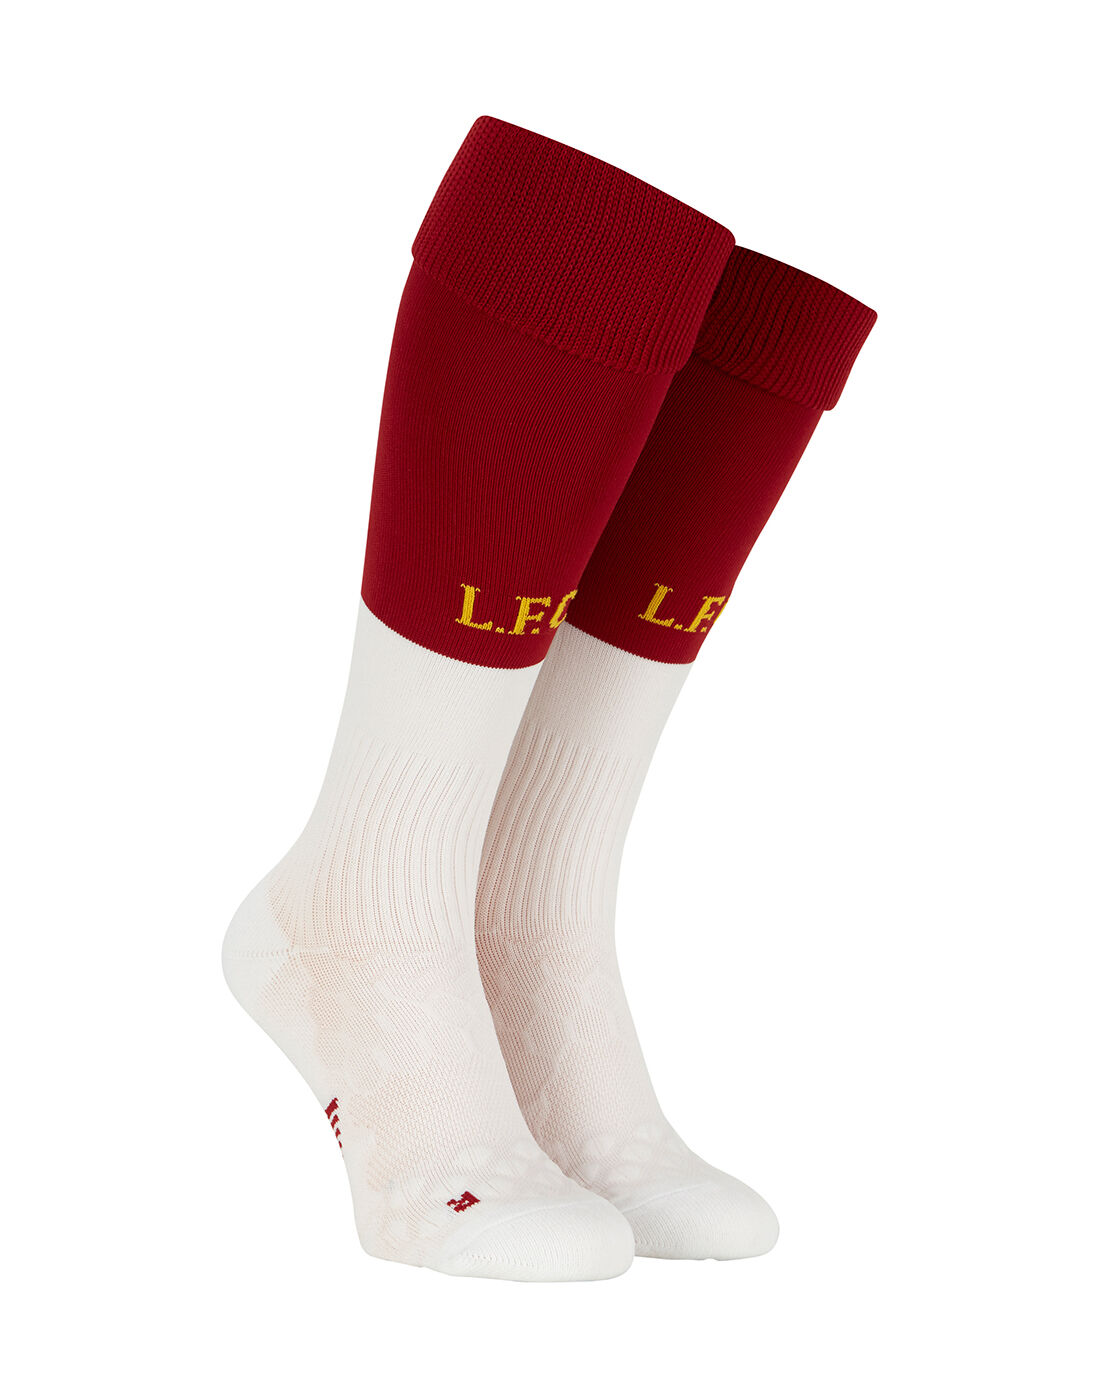 new balance liverpool socks